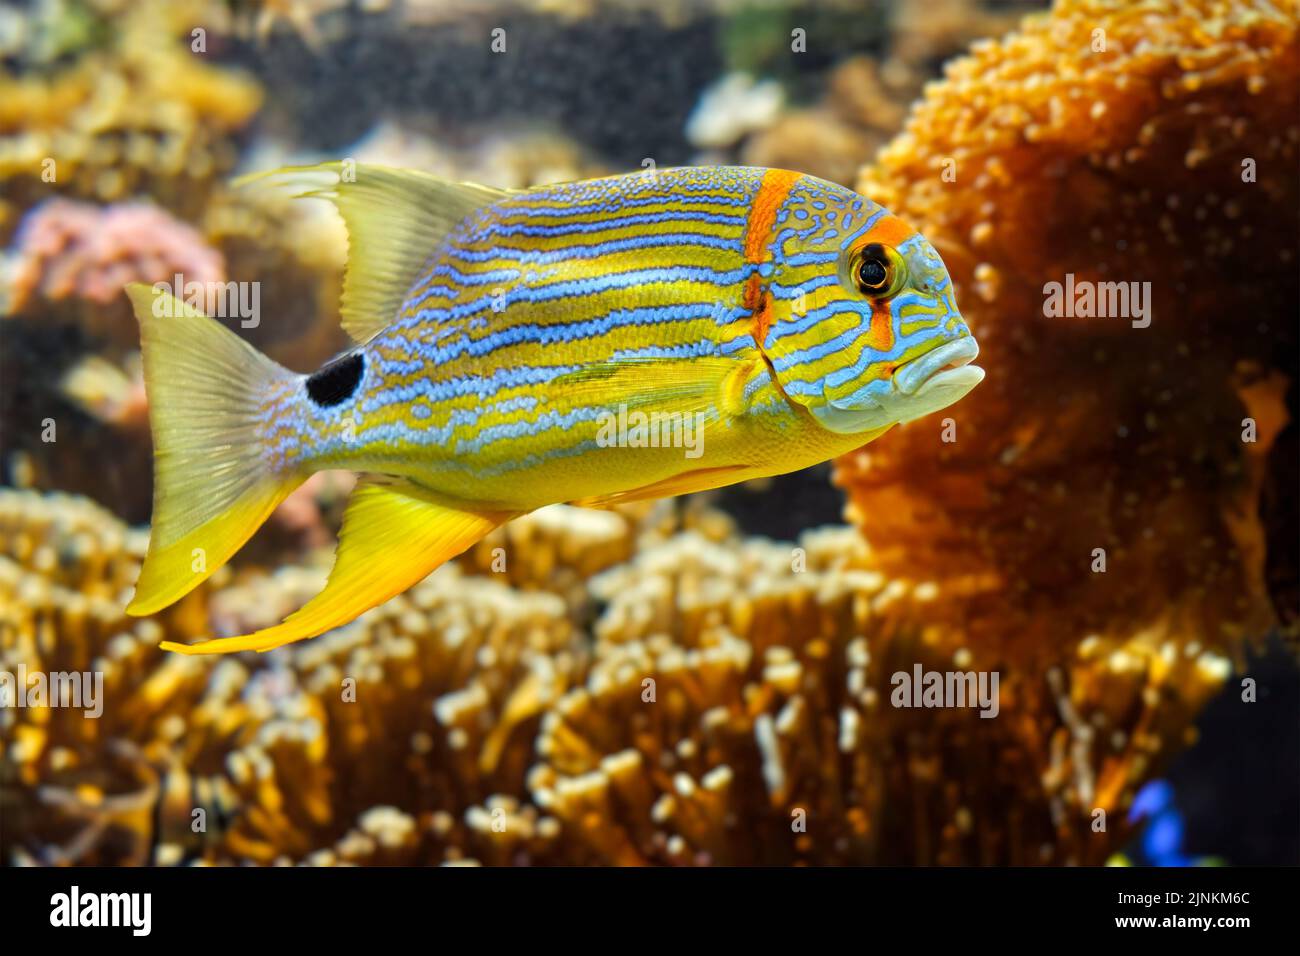 symphorichthys spilurus Stock Photo